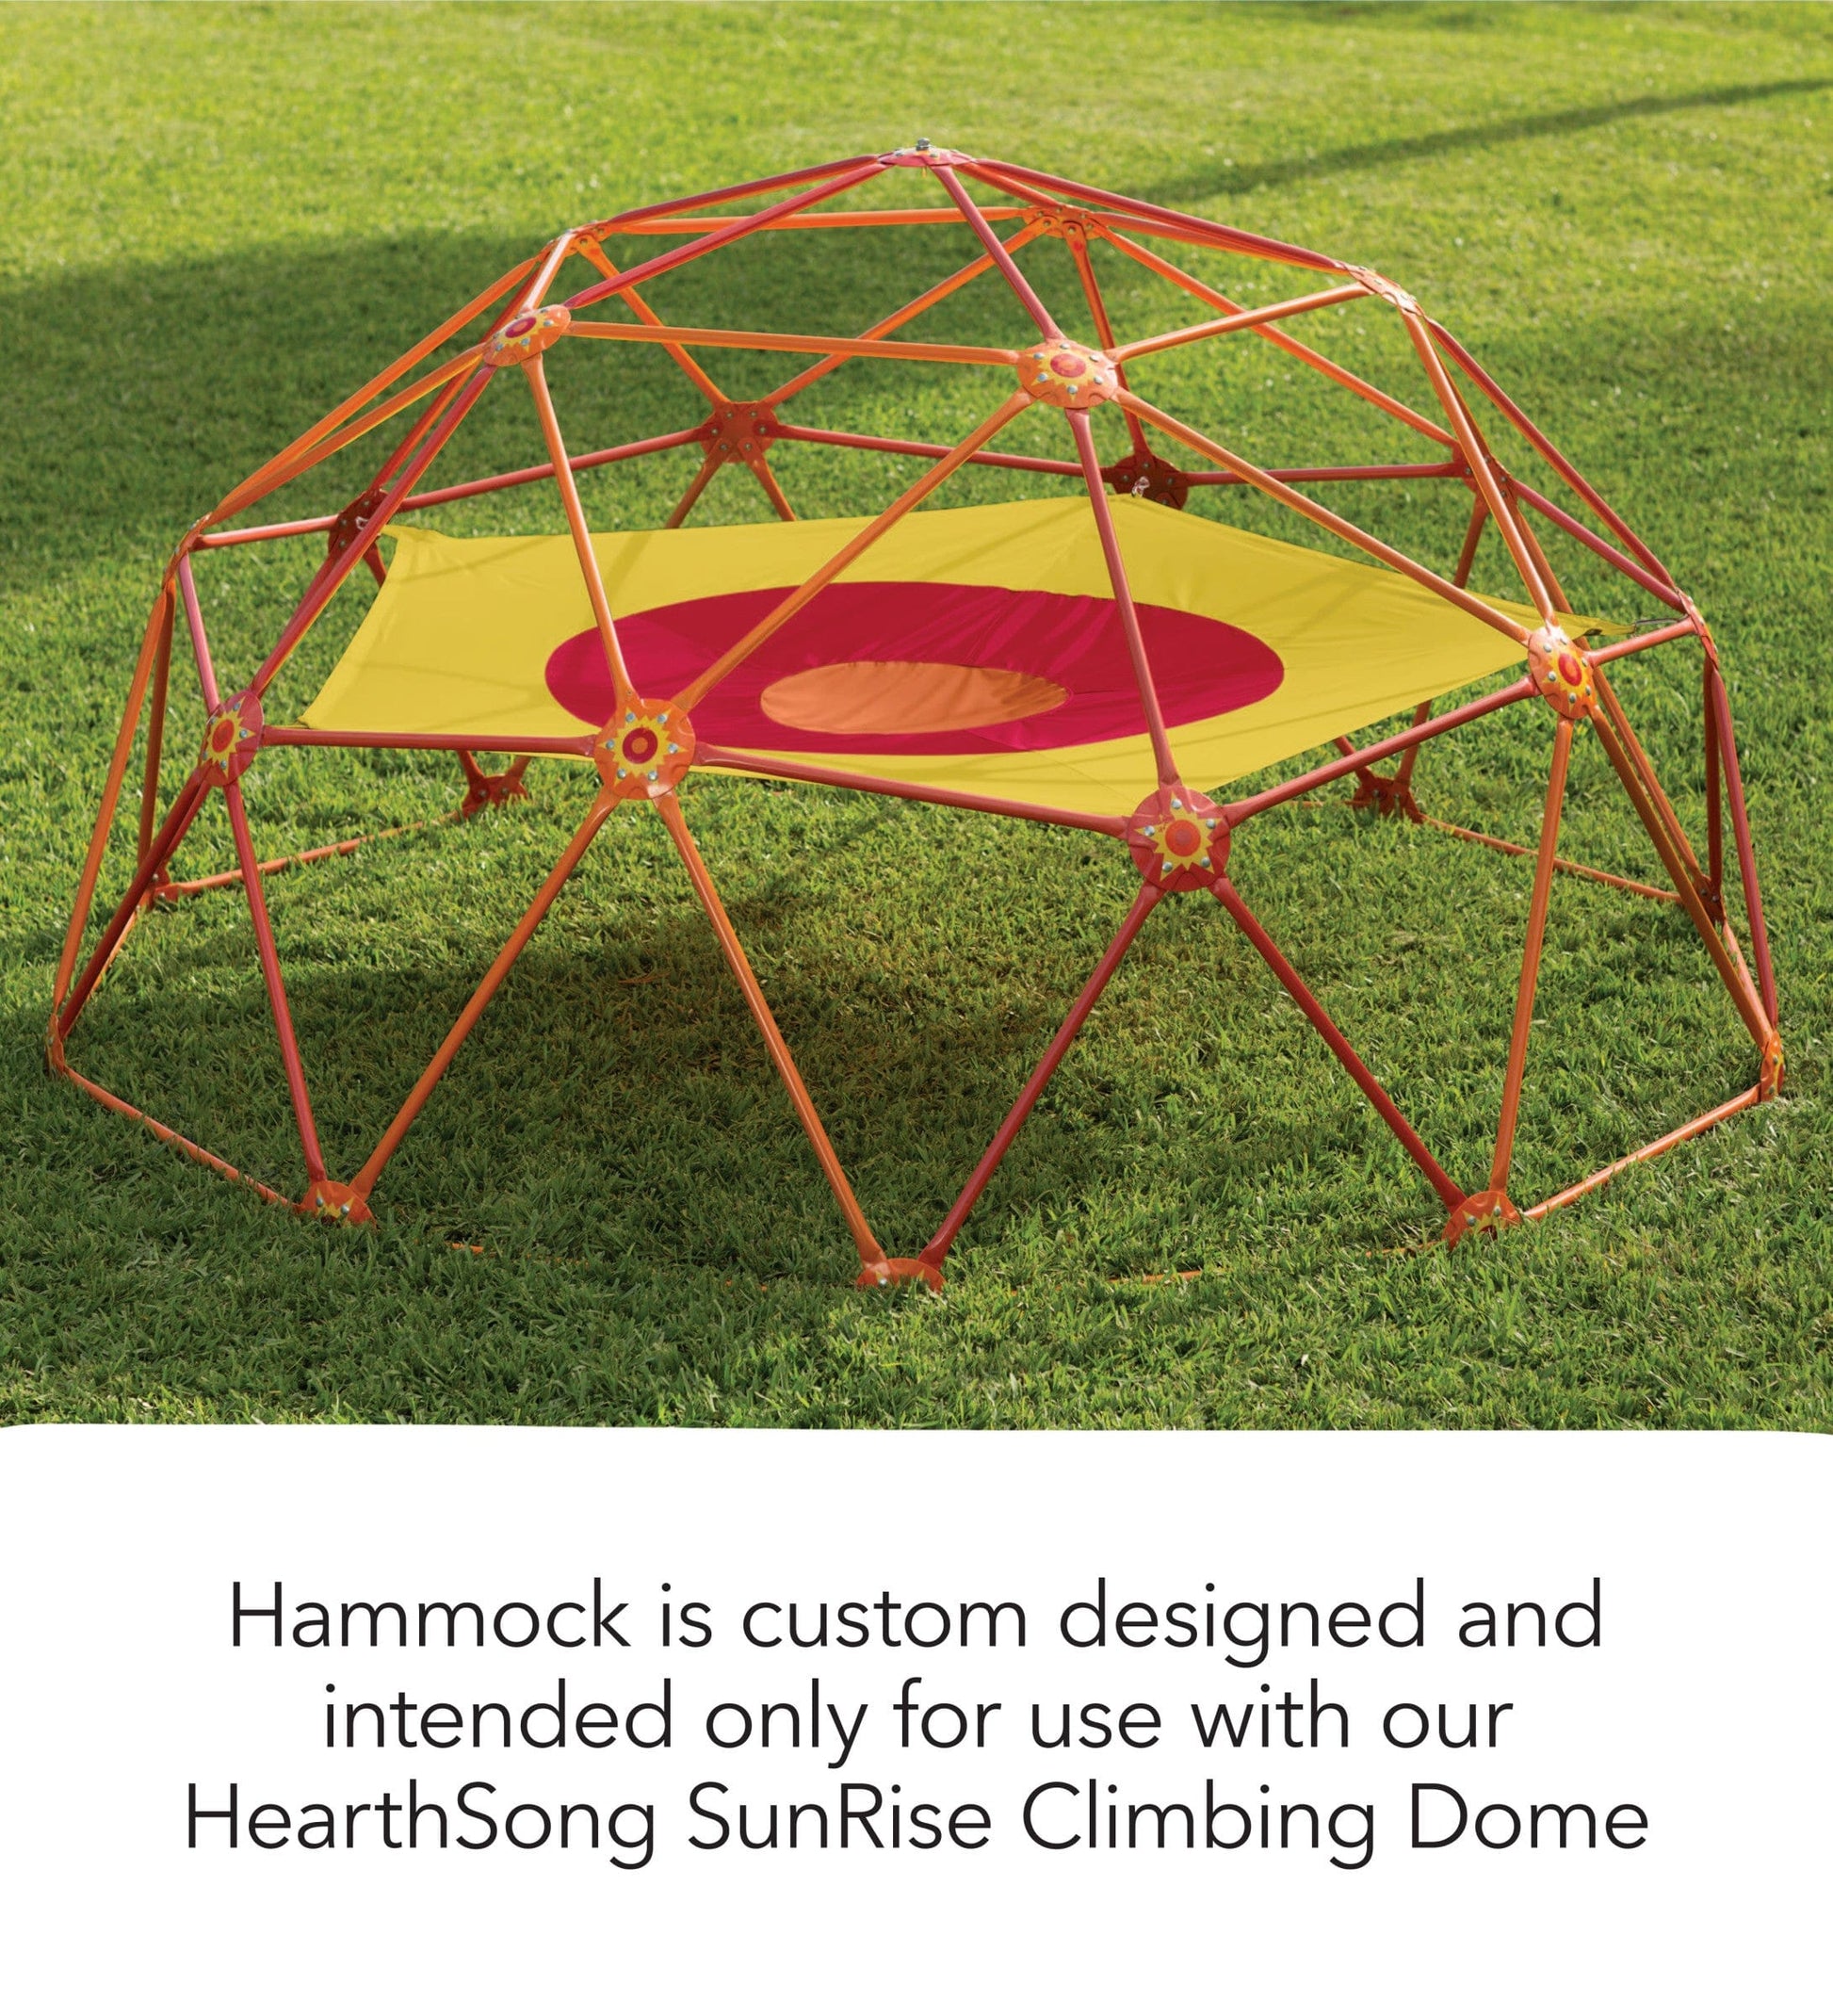 7-Foot Star Hammock Accessory for SunRise Climbing Dome